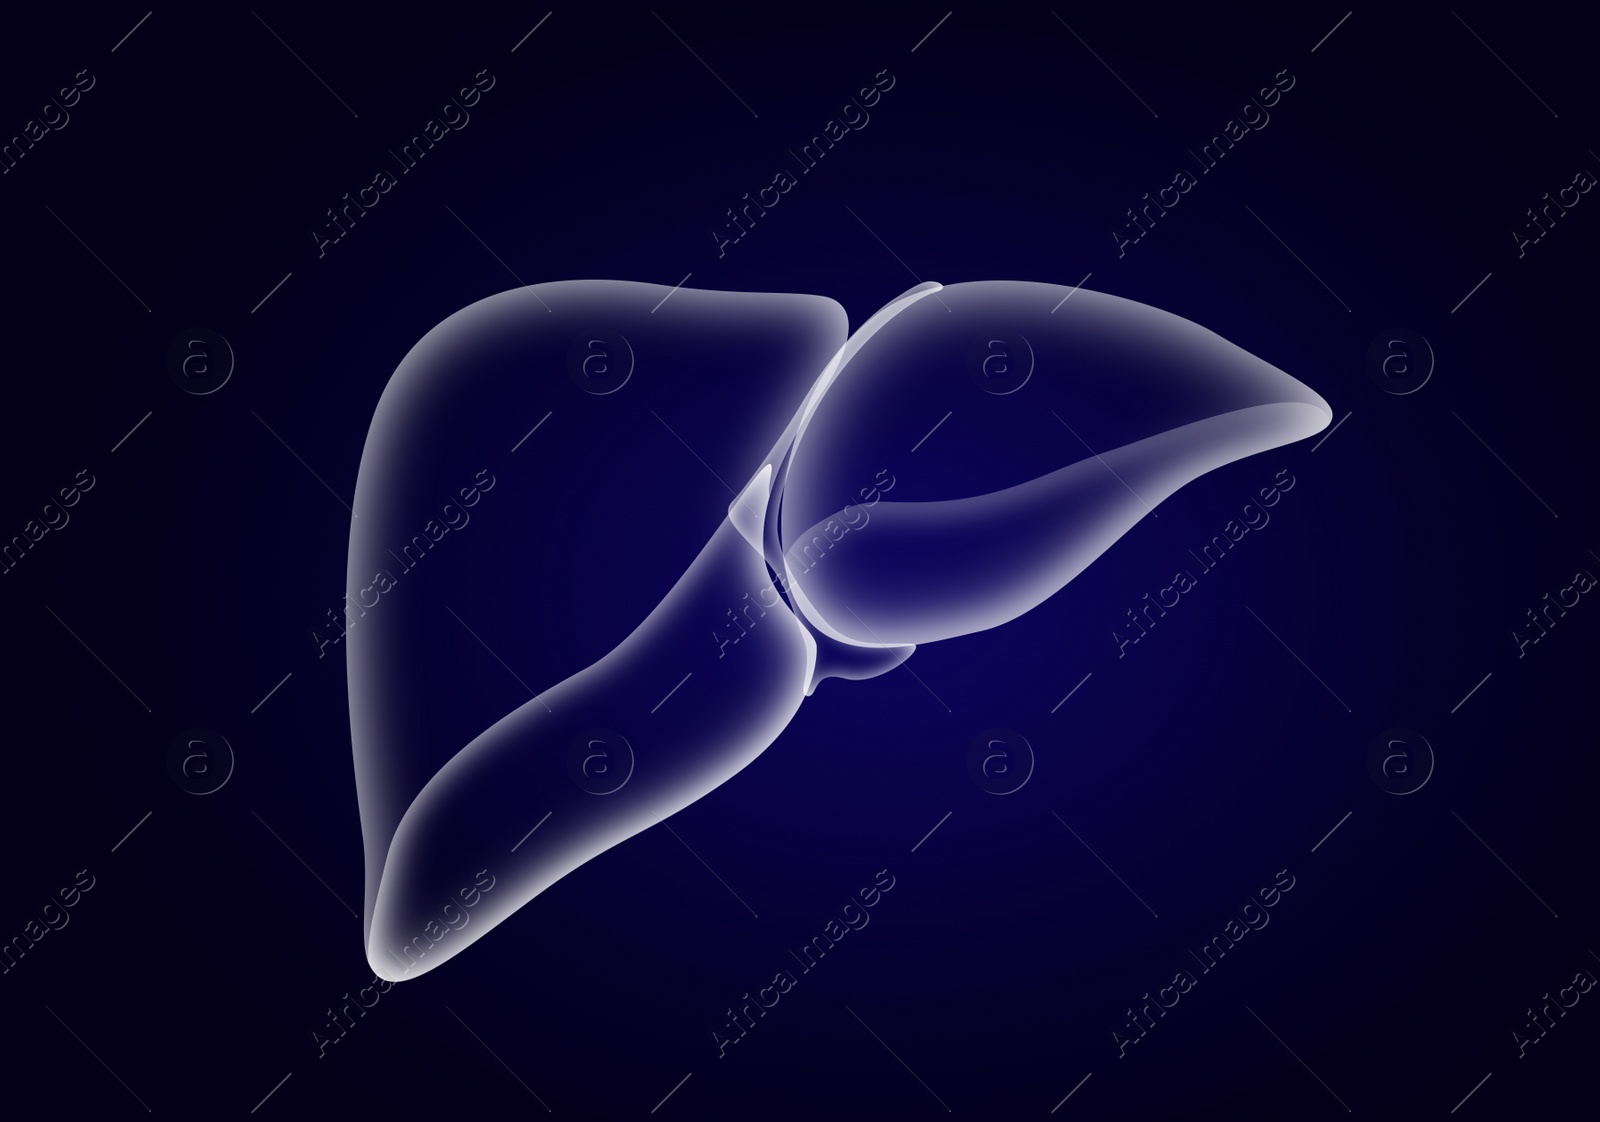 Illustration of  liver on dark blue background. Human anatomy 